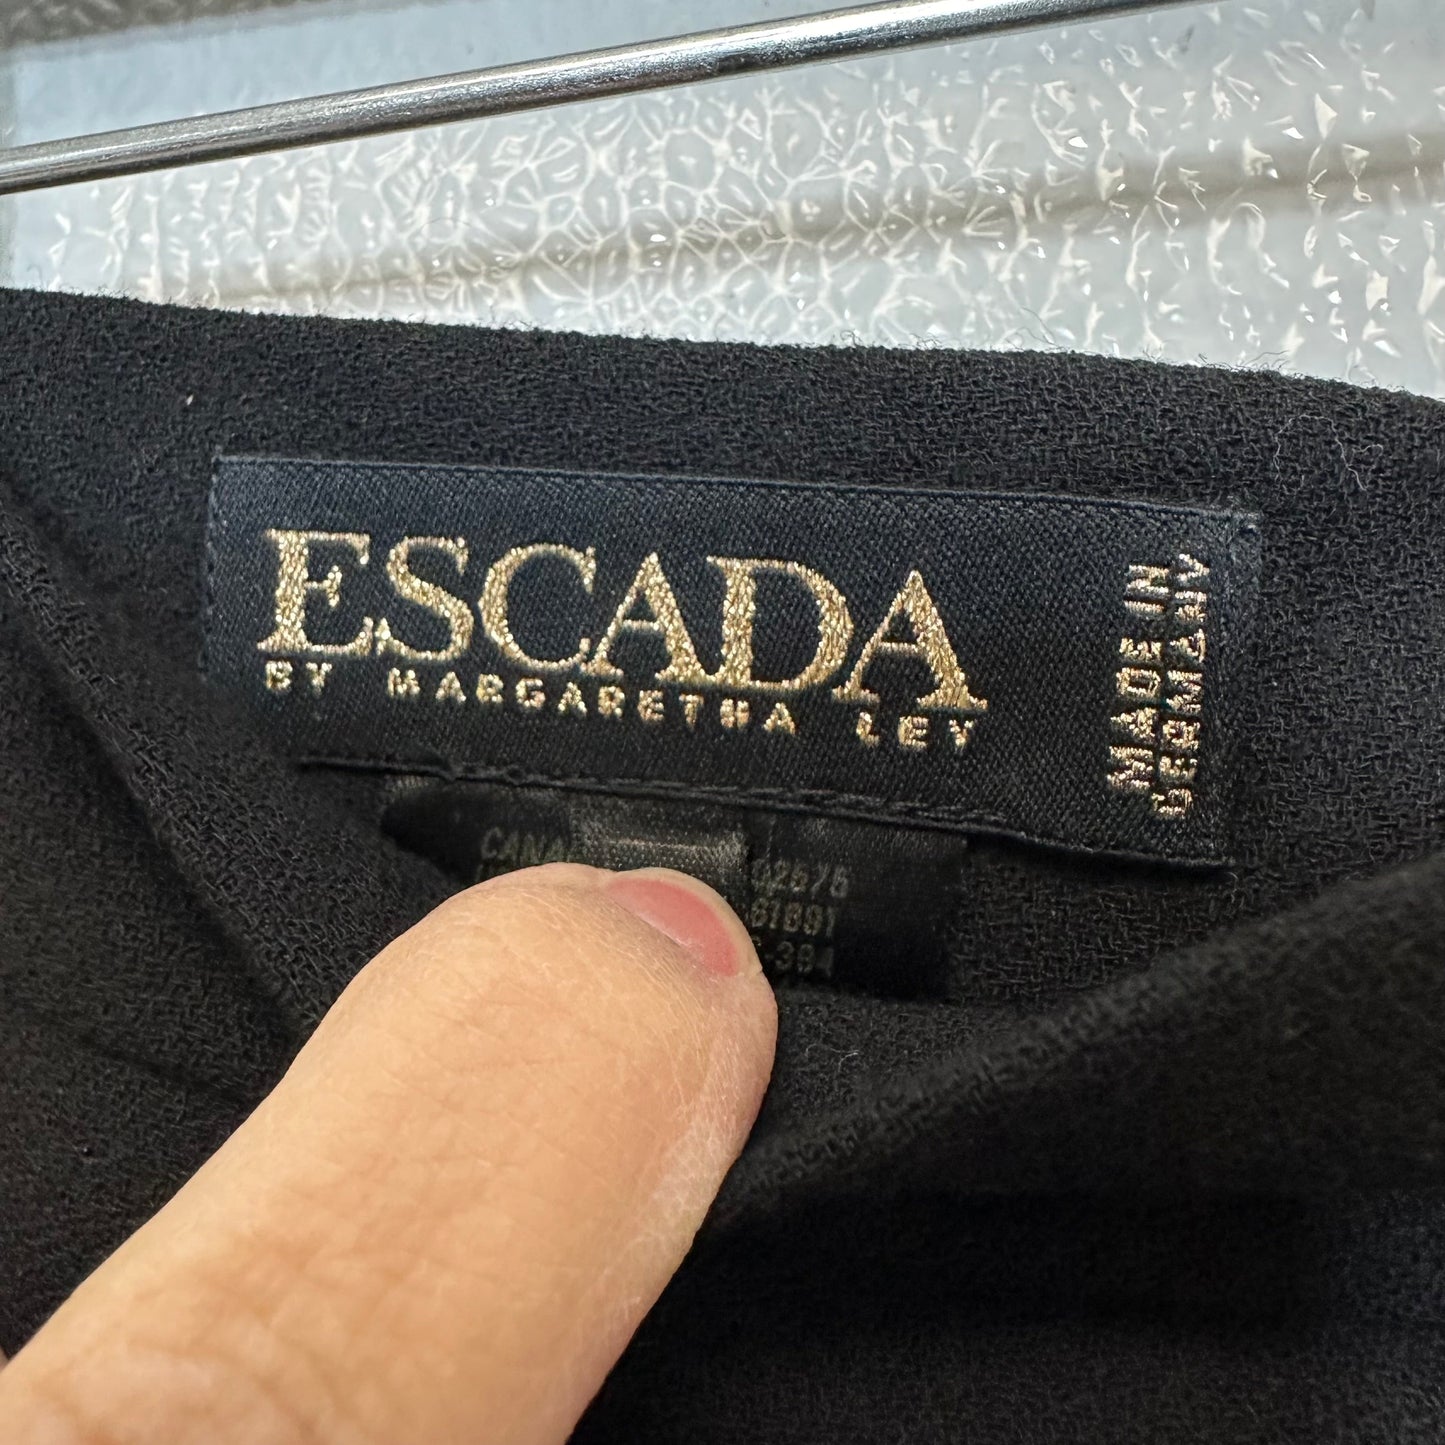 Skirt Midi By Escada  Size: 40